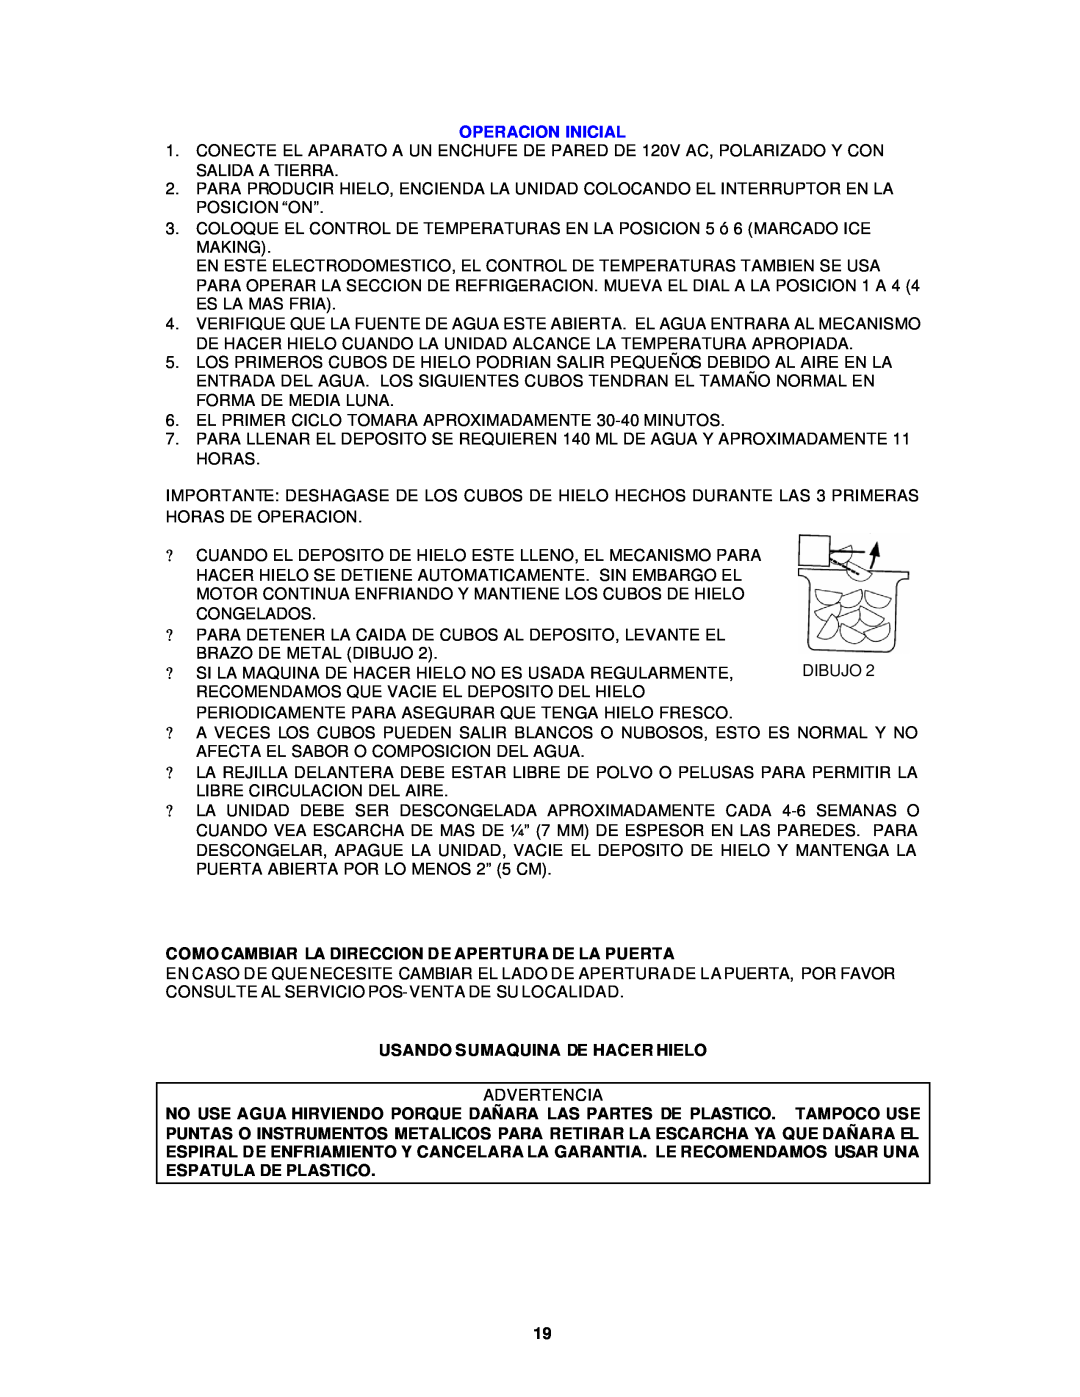 Avanti IM320299 instruction manual Operacion Inicial, Usando Sumaquina De Hacer Hielo 